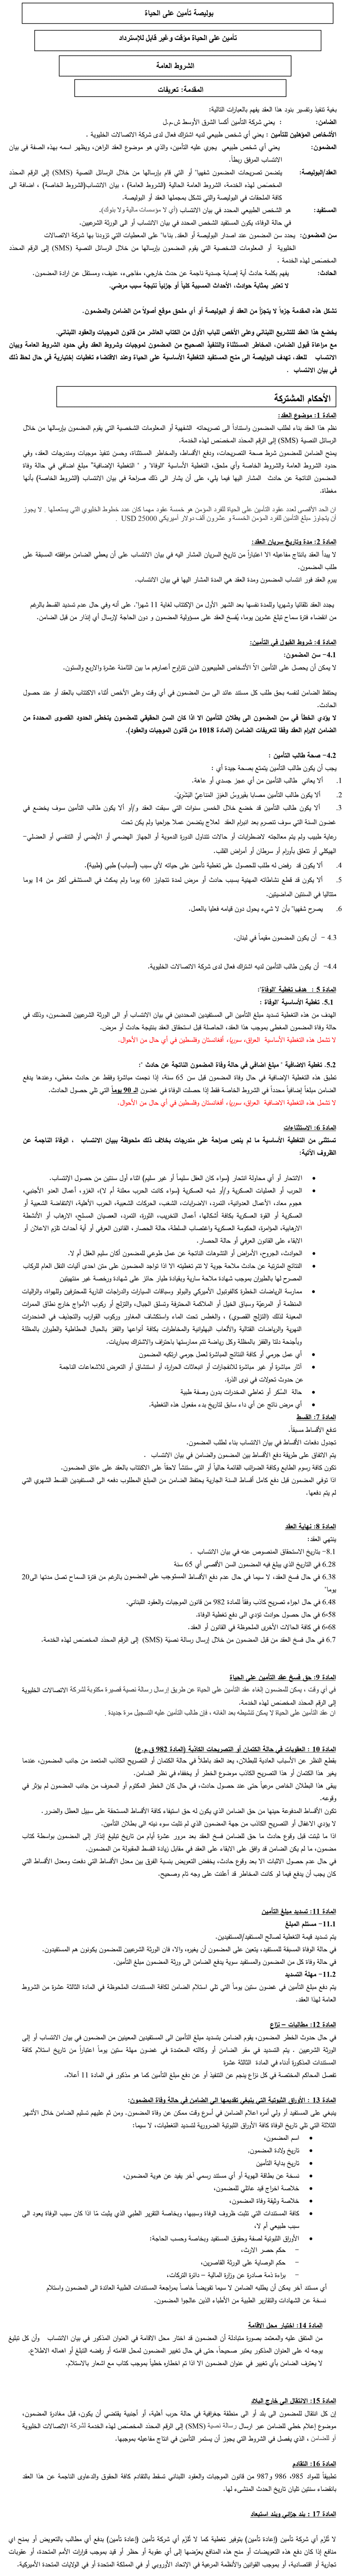 Axa Insurance Terms in Arabic